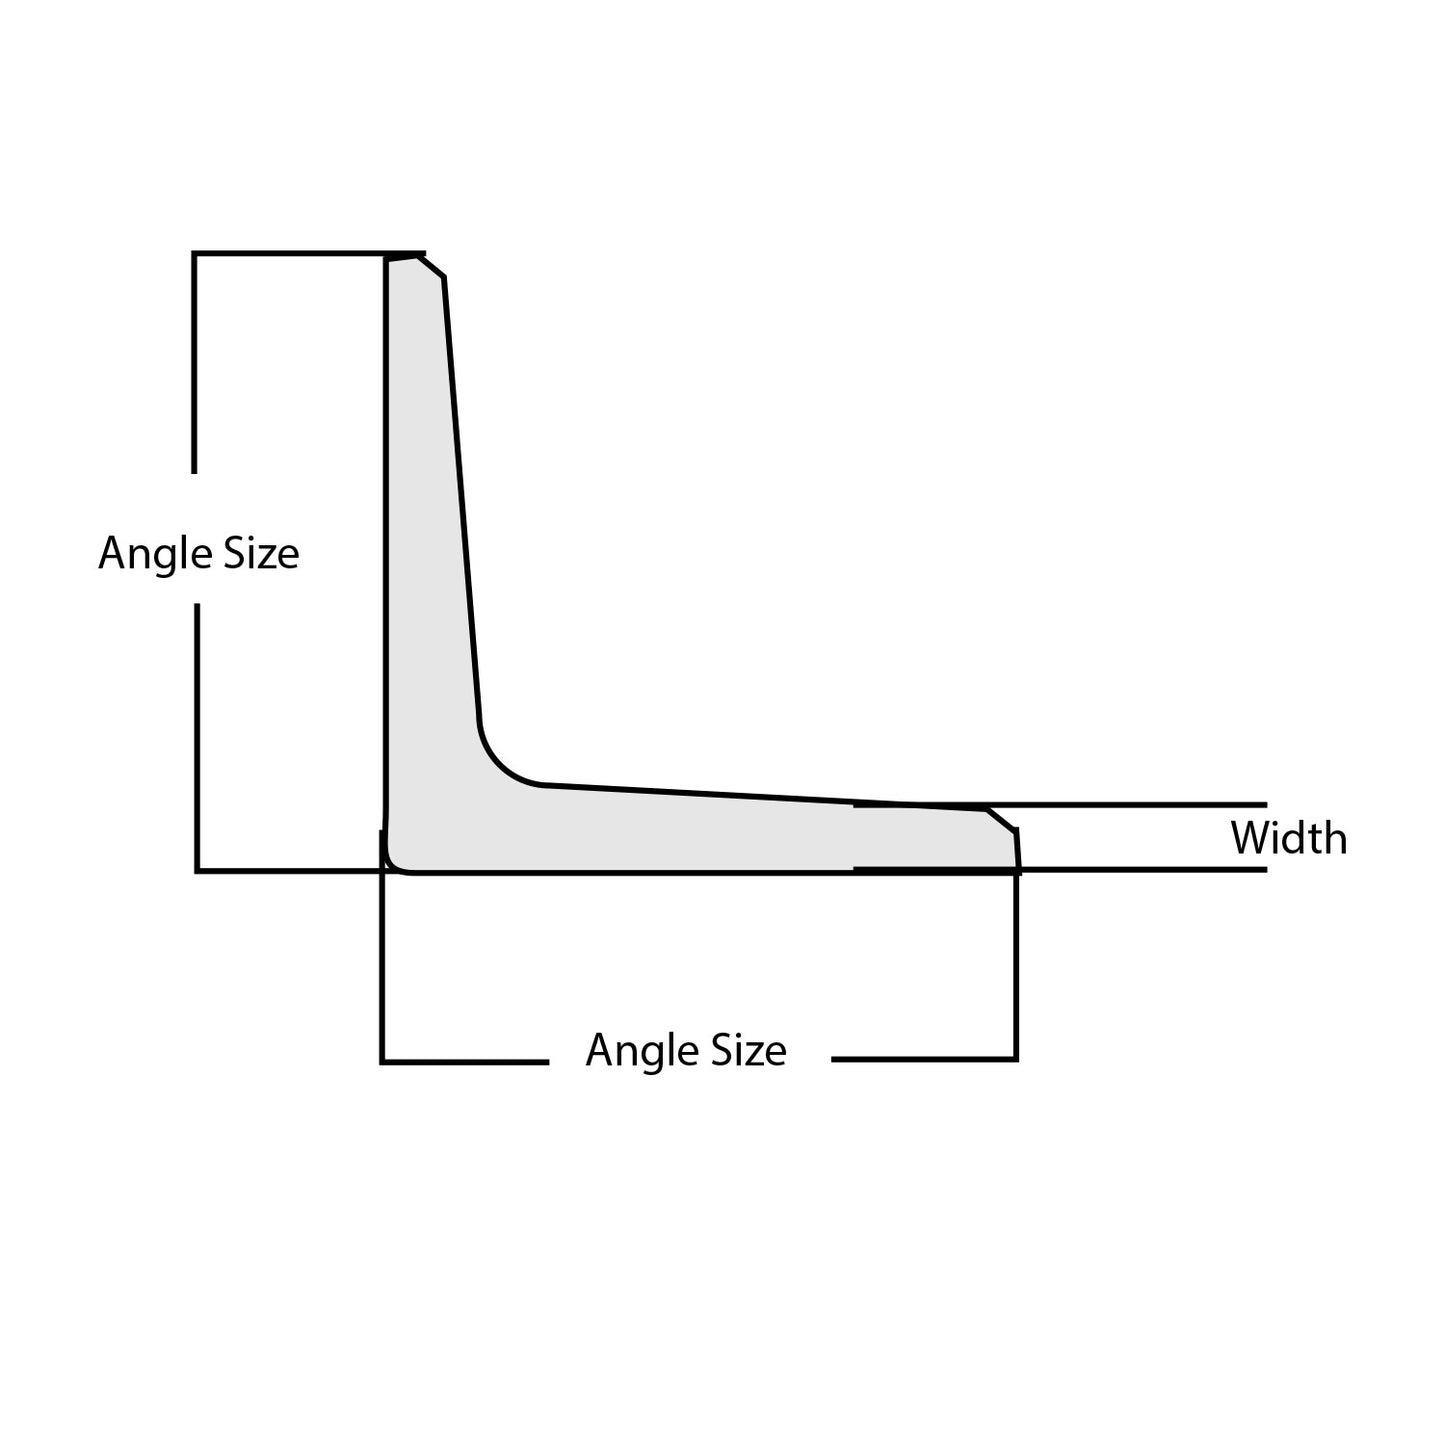 6" x 4" Aluminum Angle  - Thickness 1/2